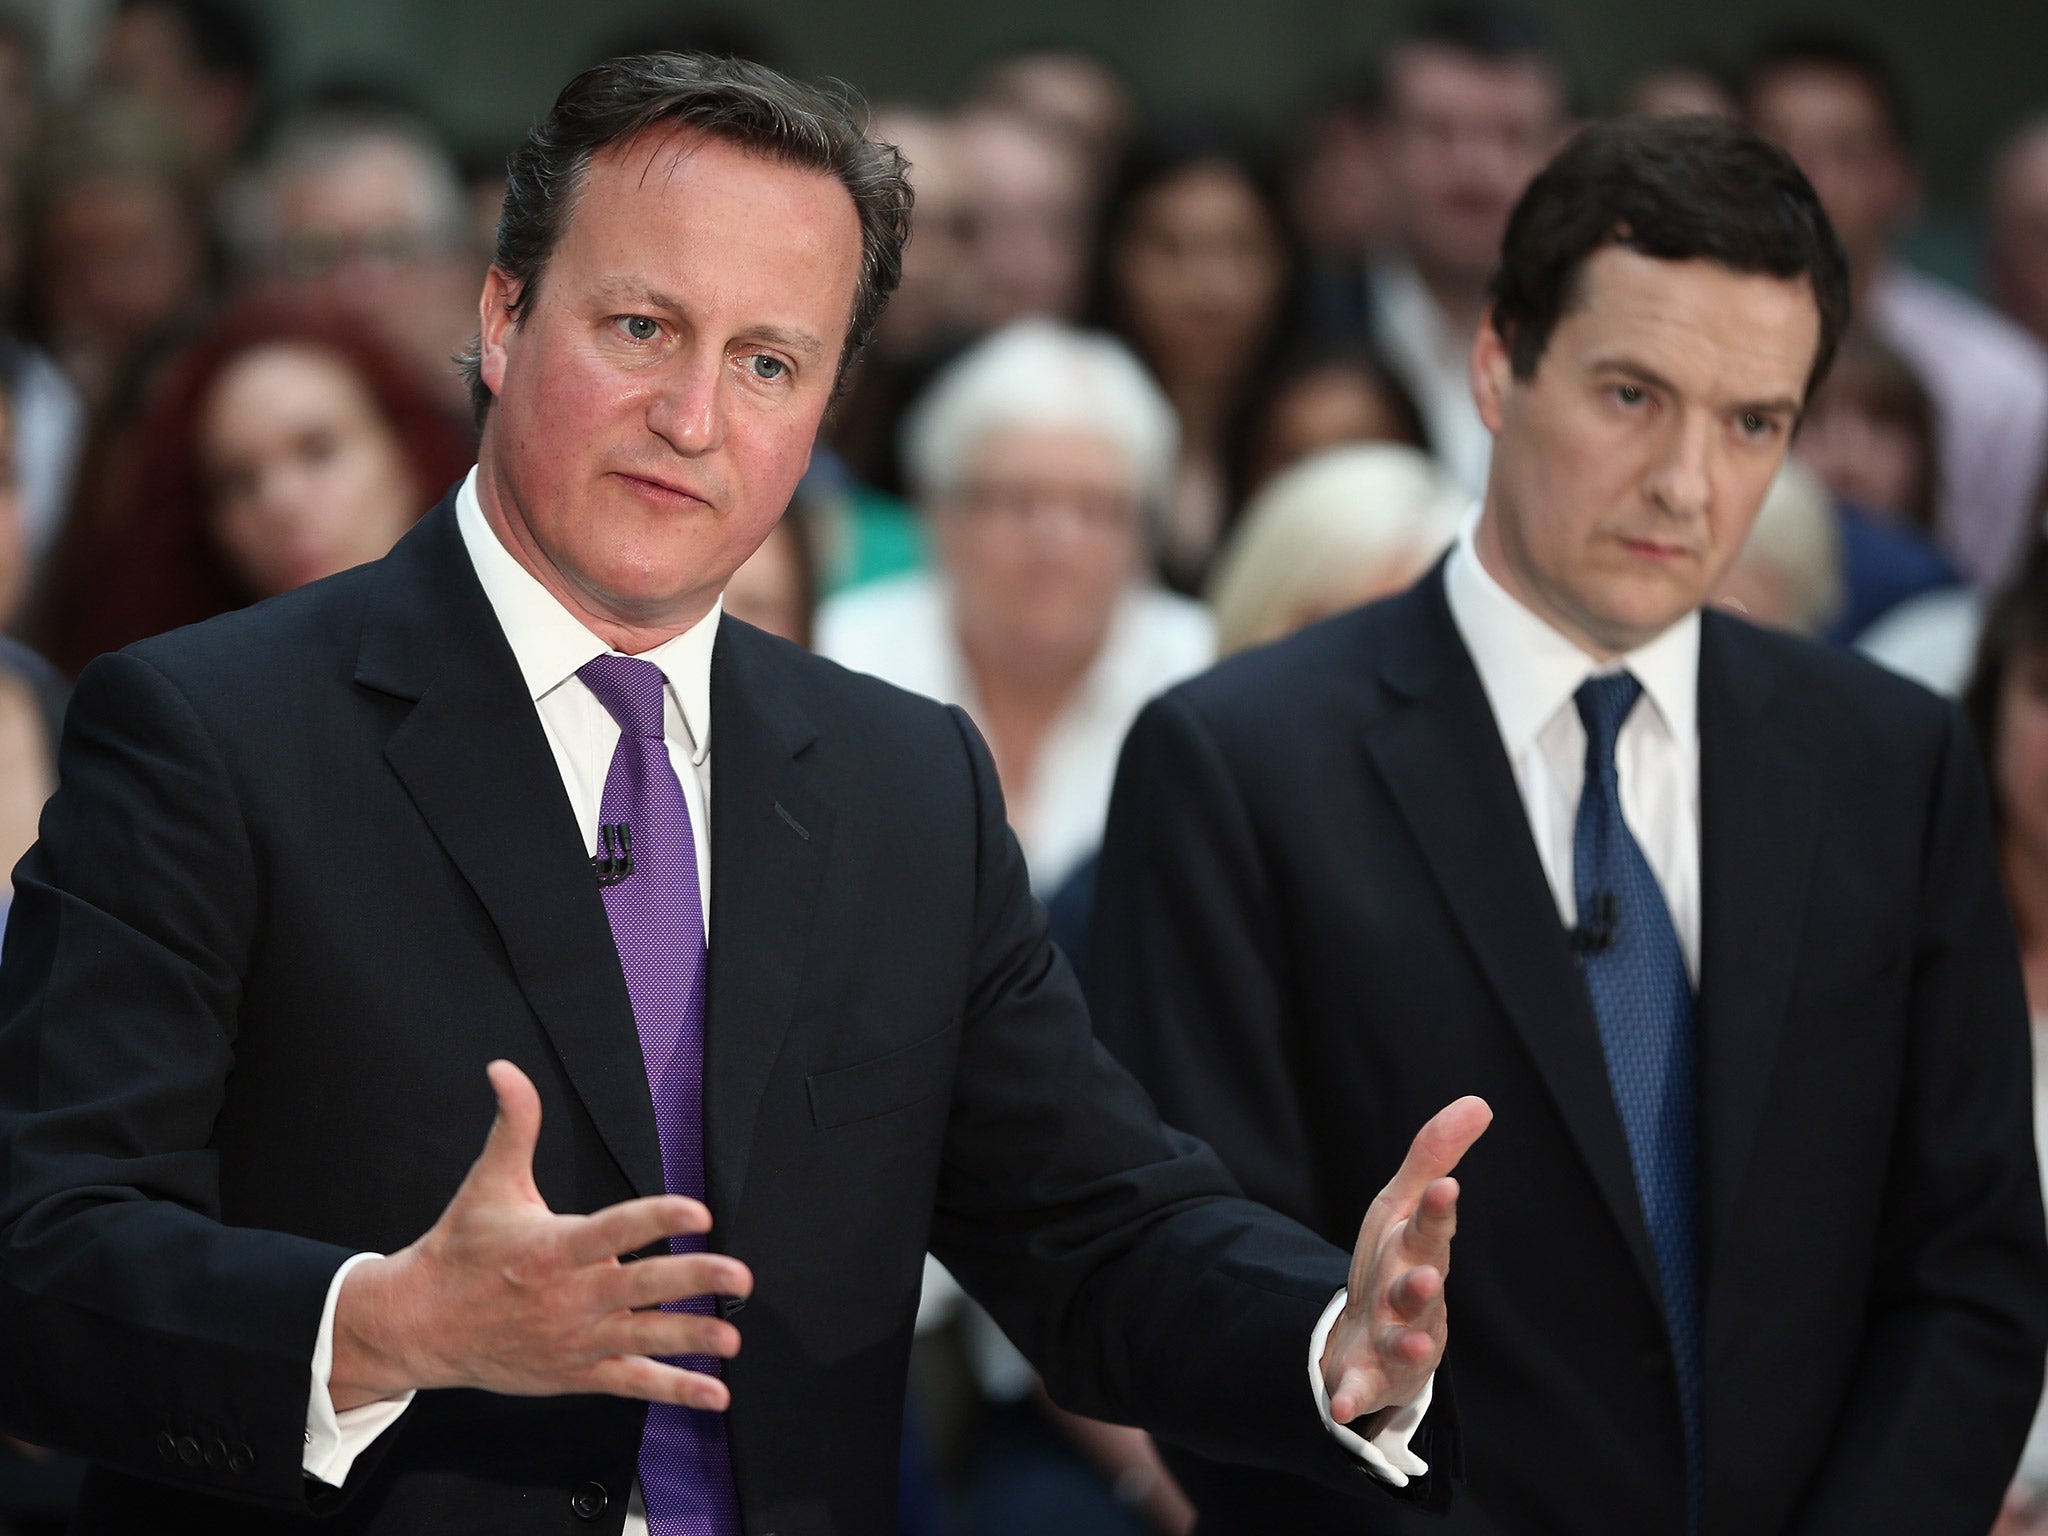 Prime Minister David Cameron and Chancellor George Osborne